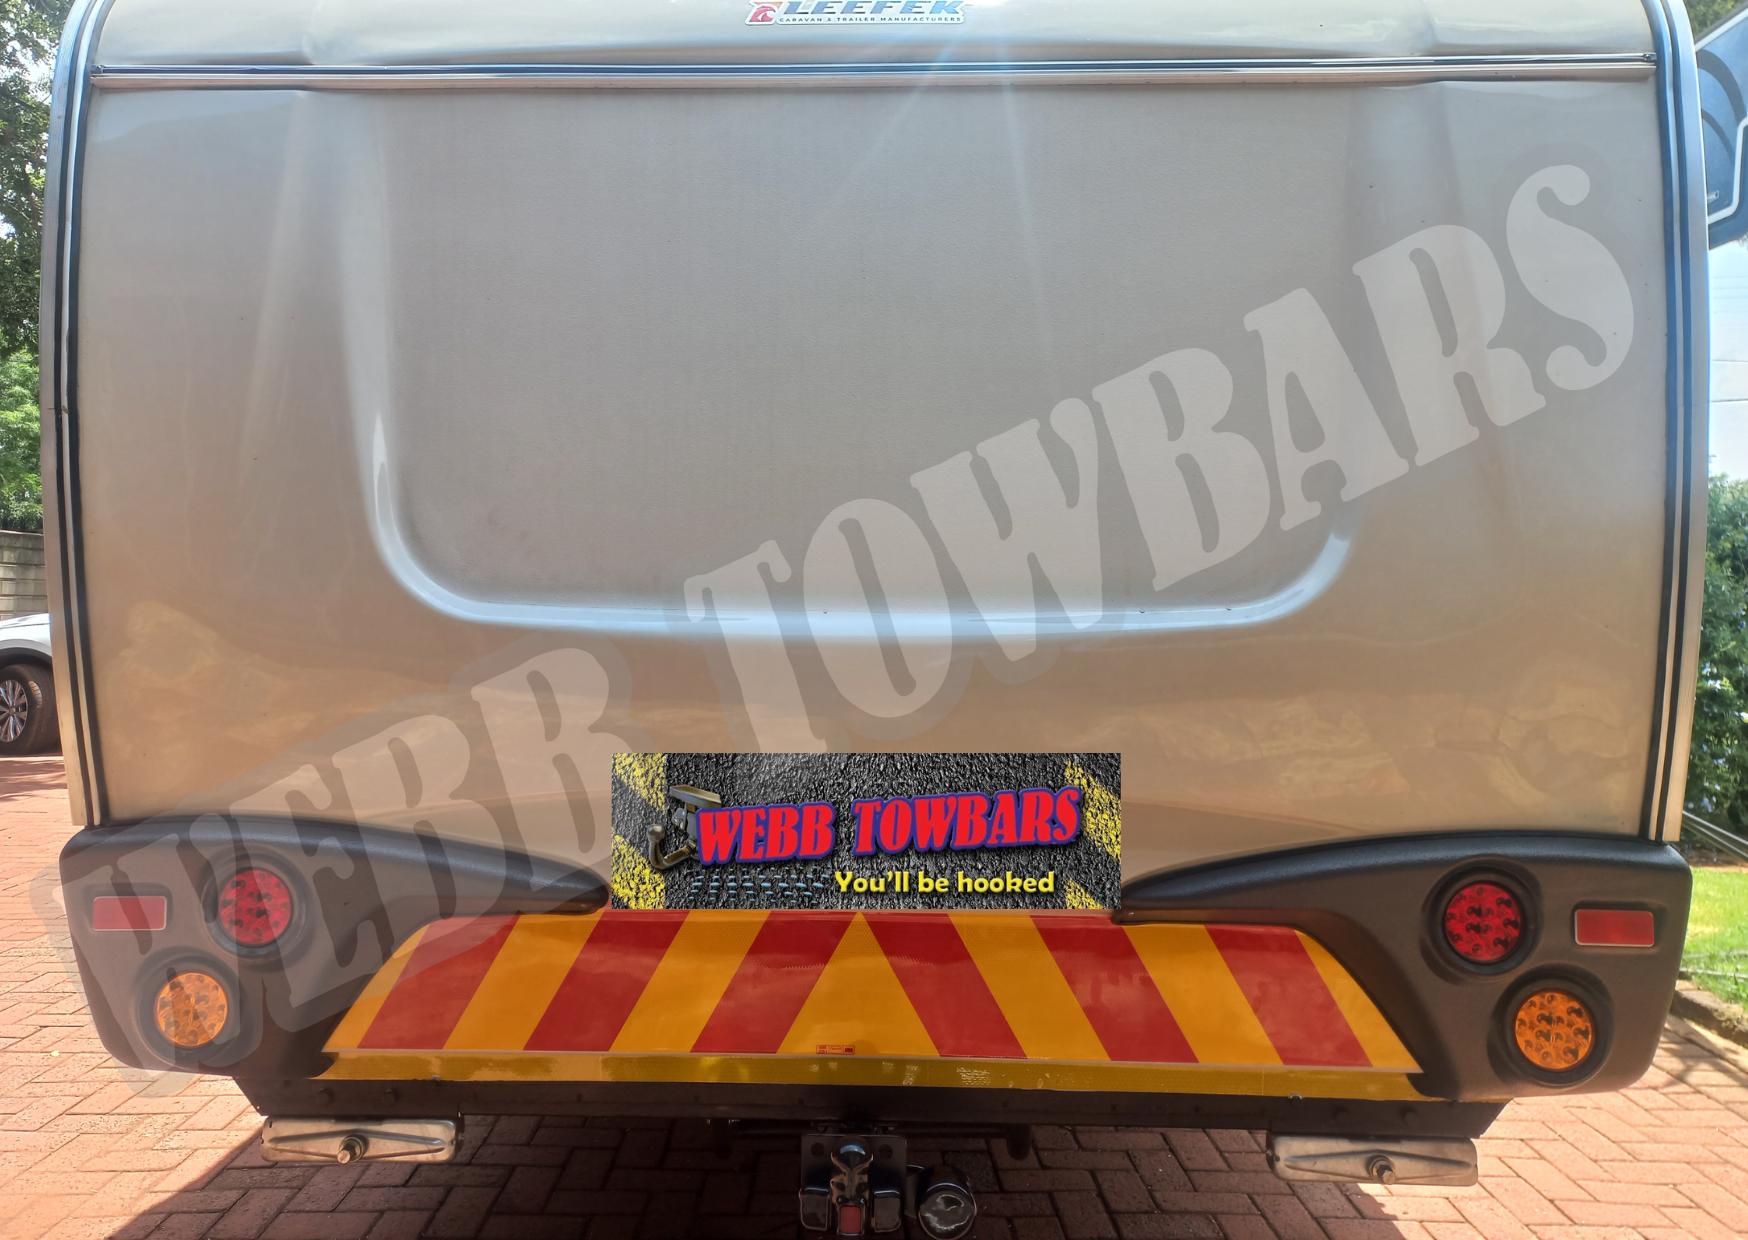 Sprite Tourer SX Eduro Caravan - Standard Towbar by Webb Towbars Gauteng, South Africa - Reliable Towing Solution for Your Sprite Caravan Adventures